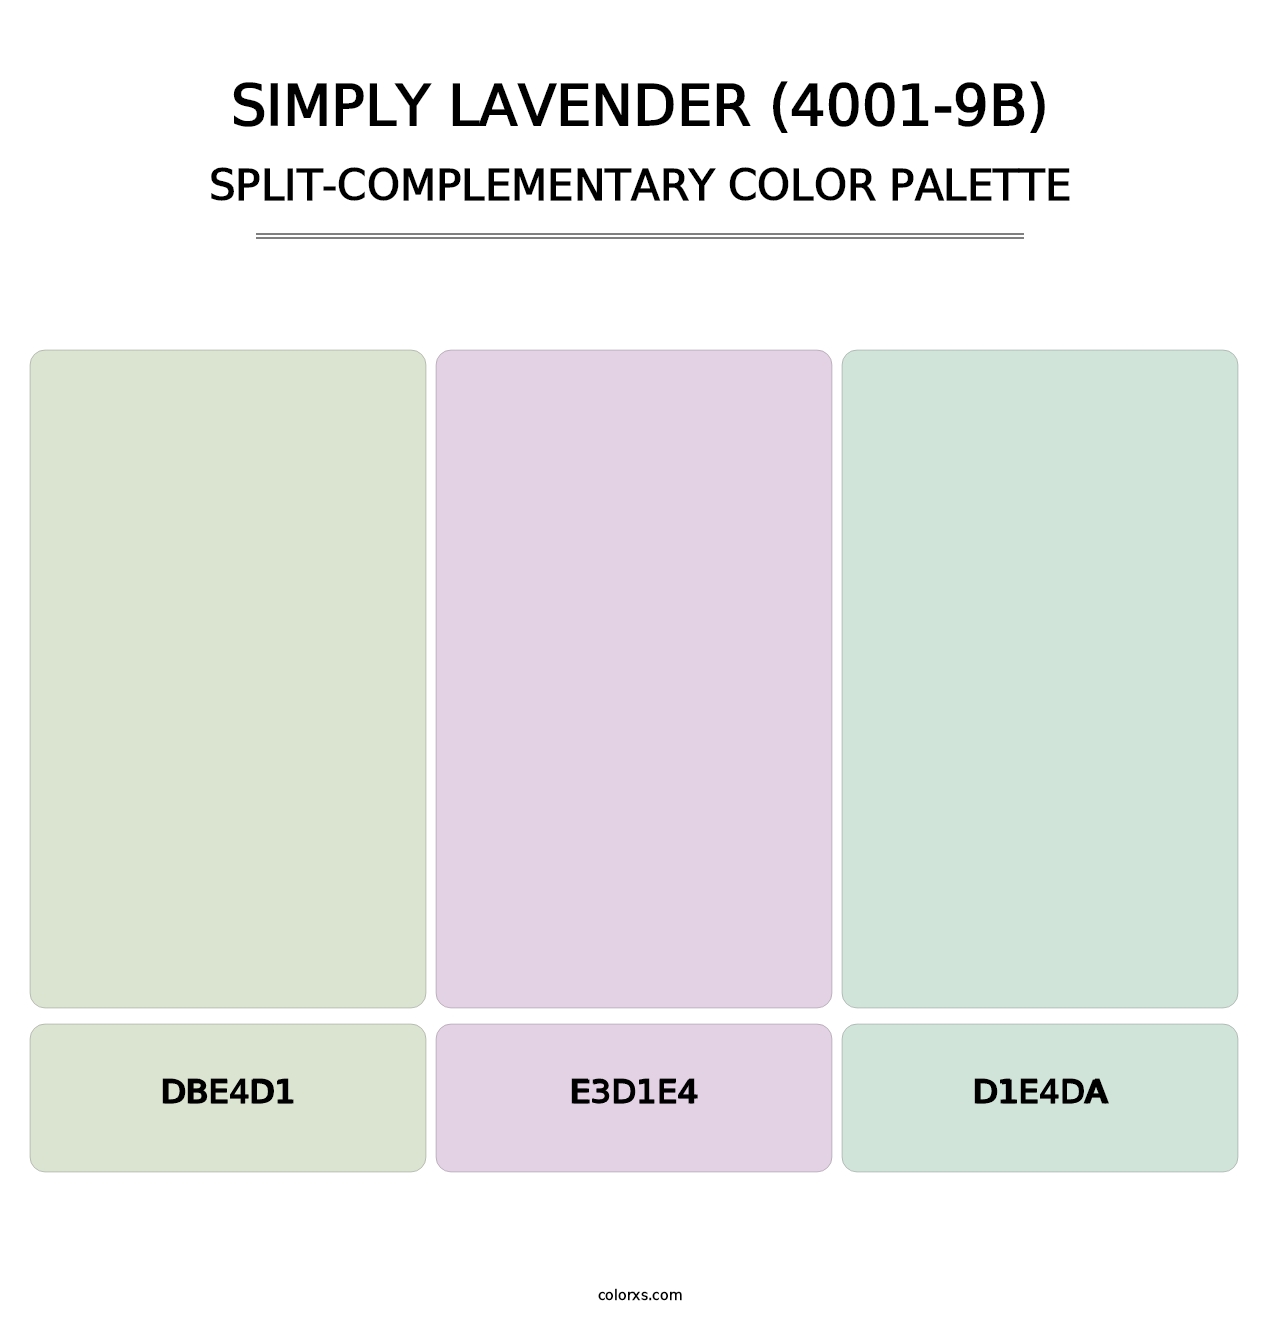 Simply Lavender (4001-9B) - Split-Complementary Color Palette